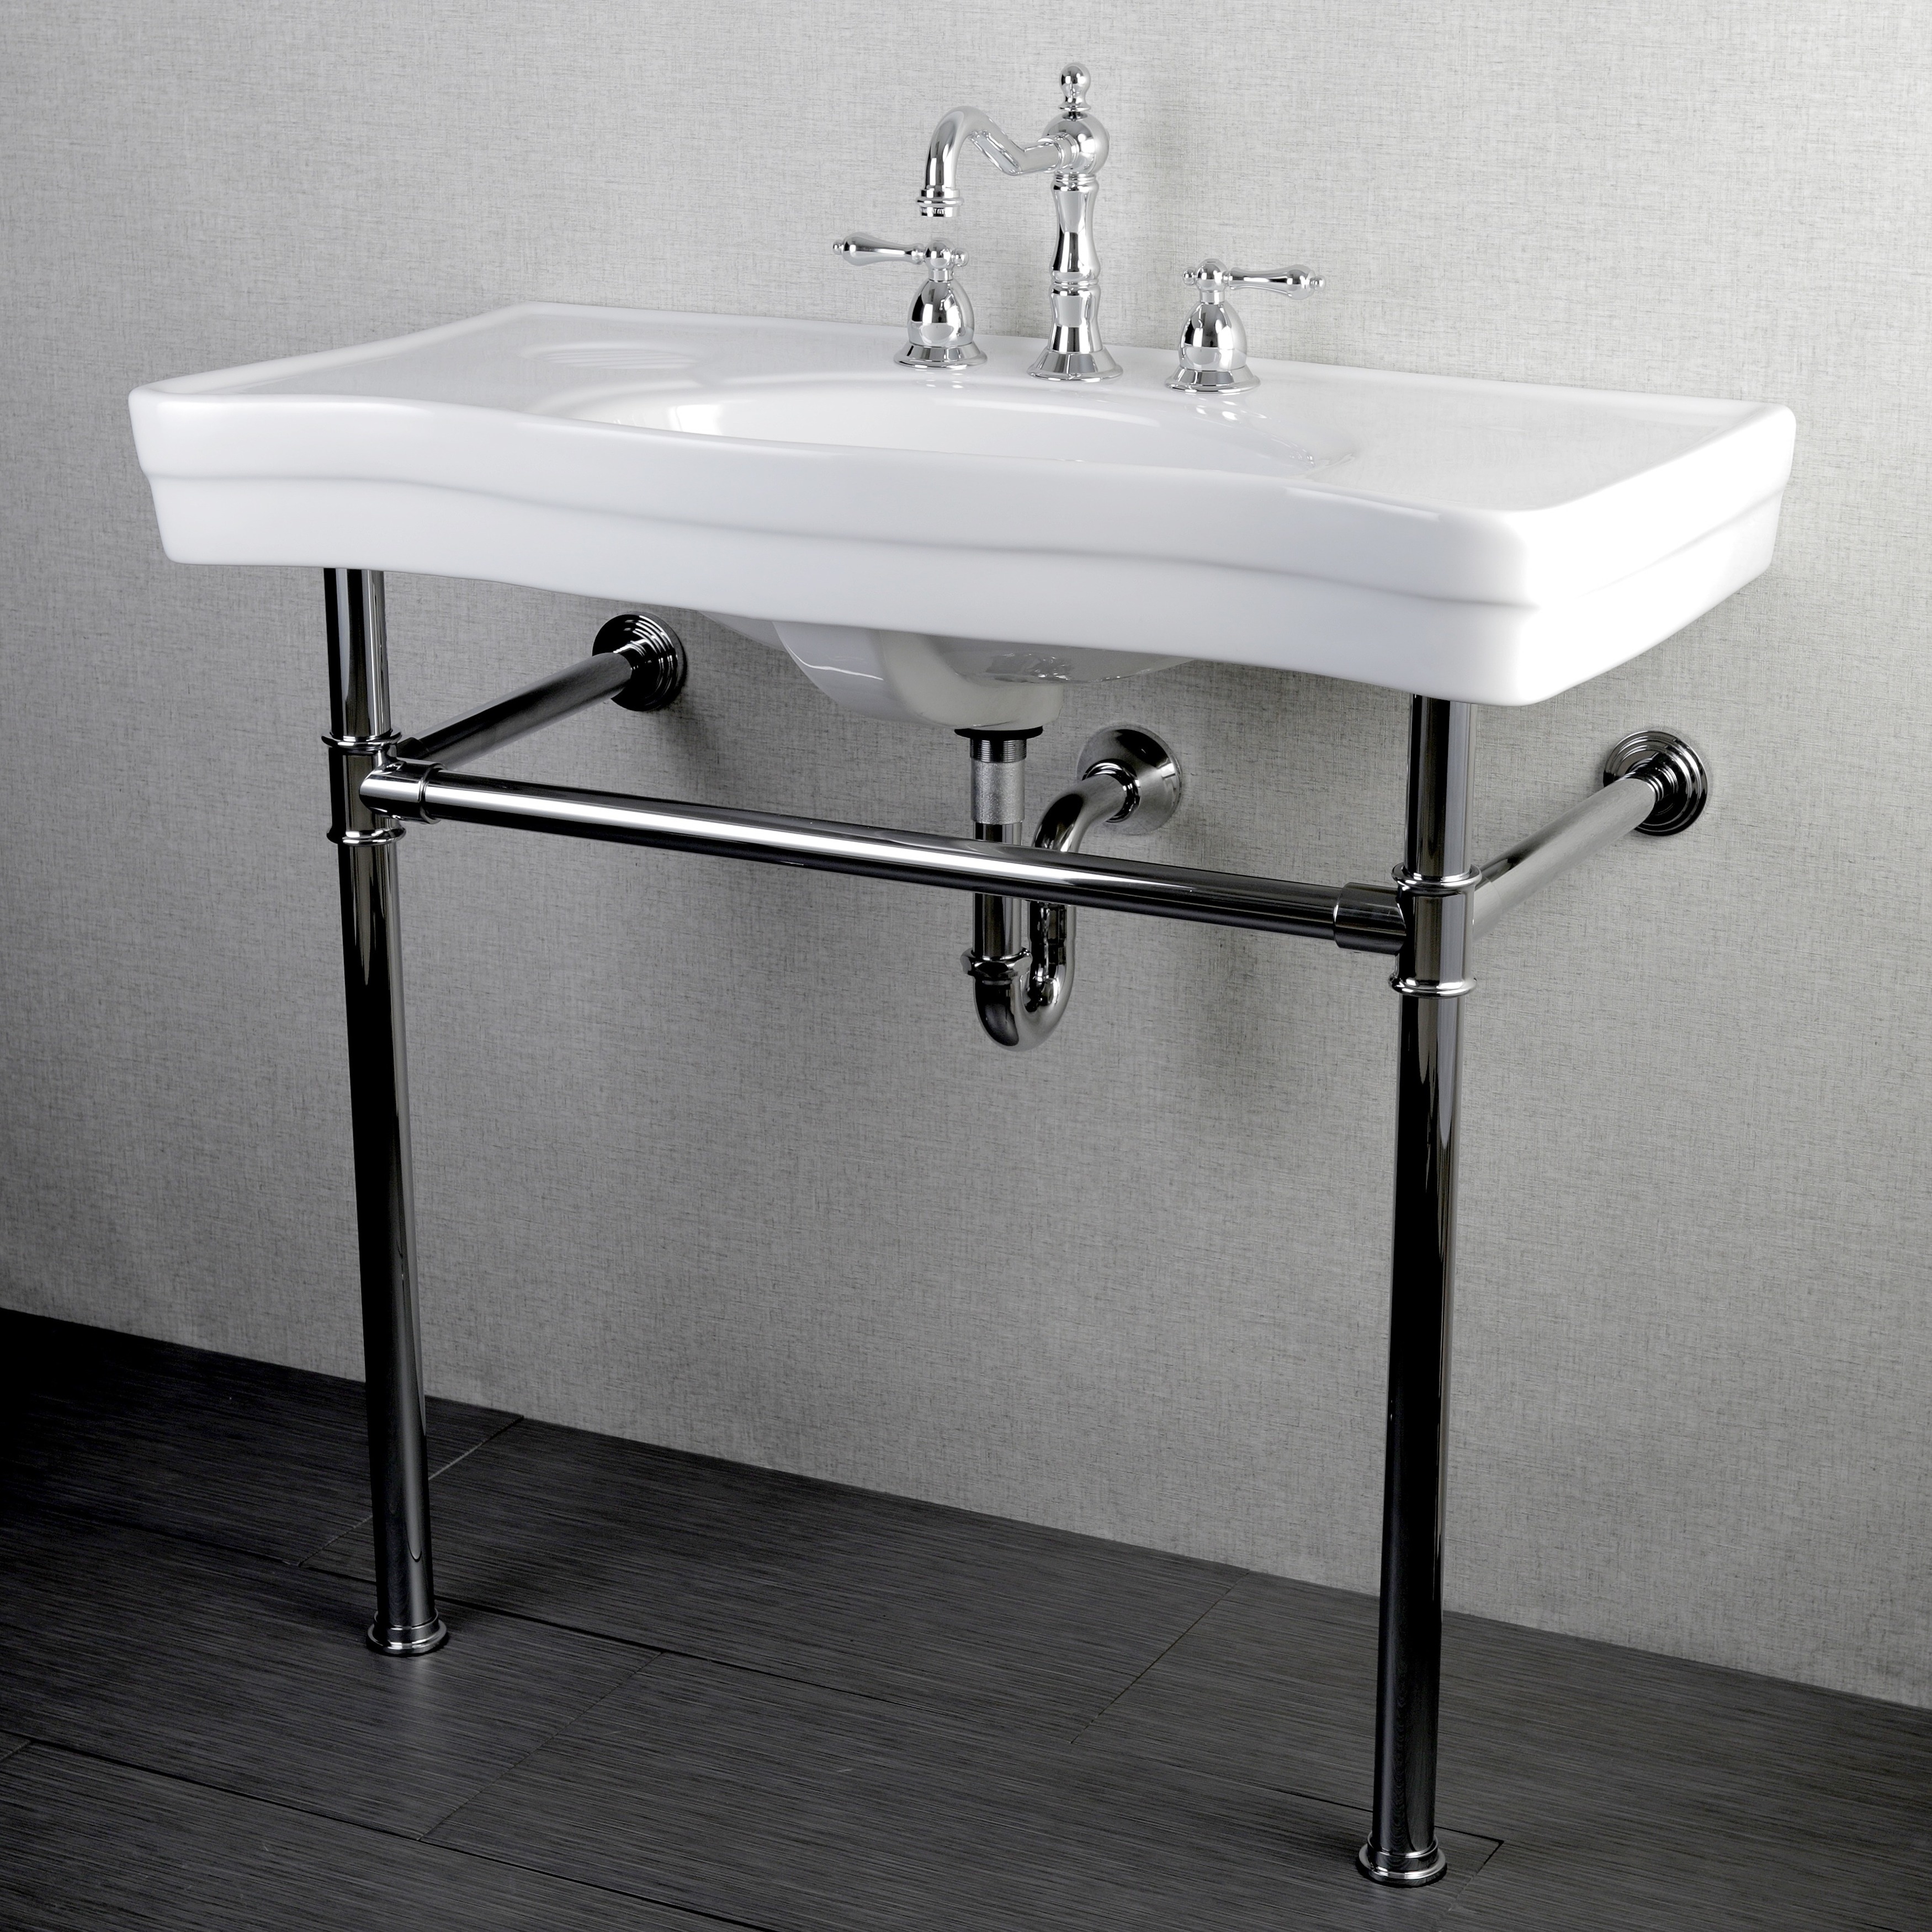 Imperial Vintage 36 Inch Wall Mount Chrome Pedestal Bathroom Sink Vanity Overstock 6573333